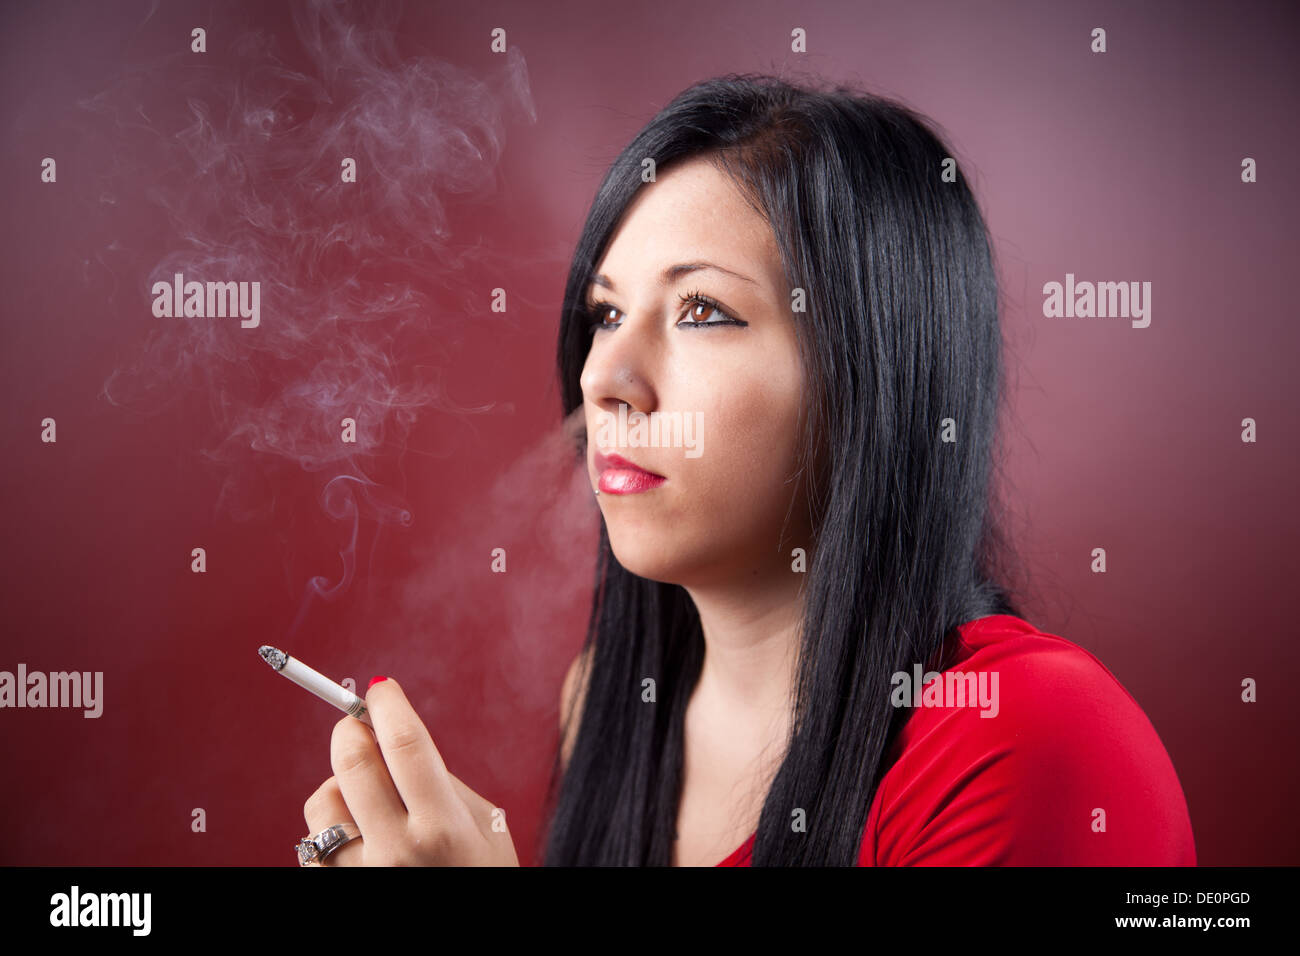 Young woman smoking a cigarette Stock Photo